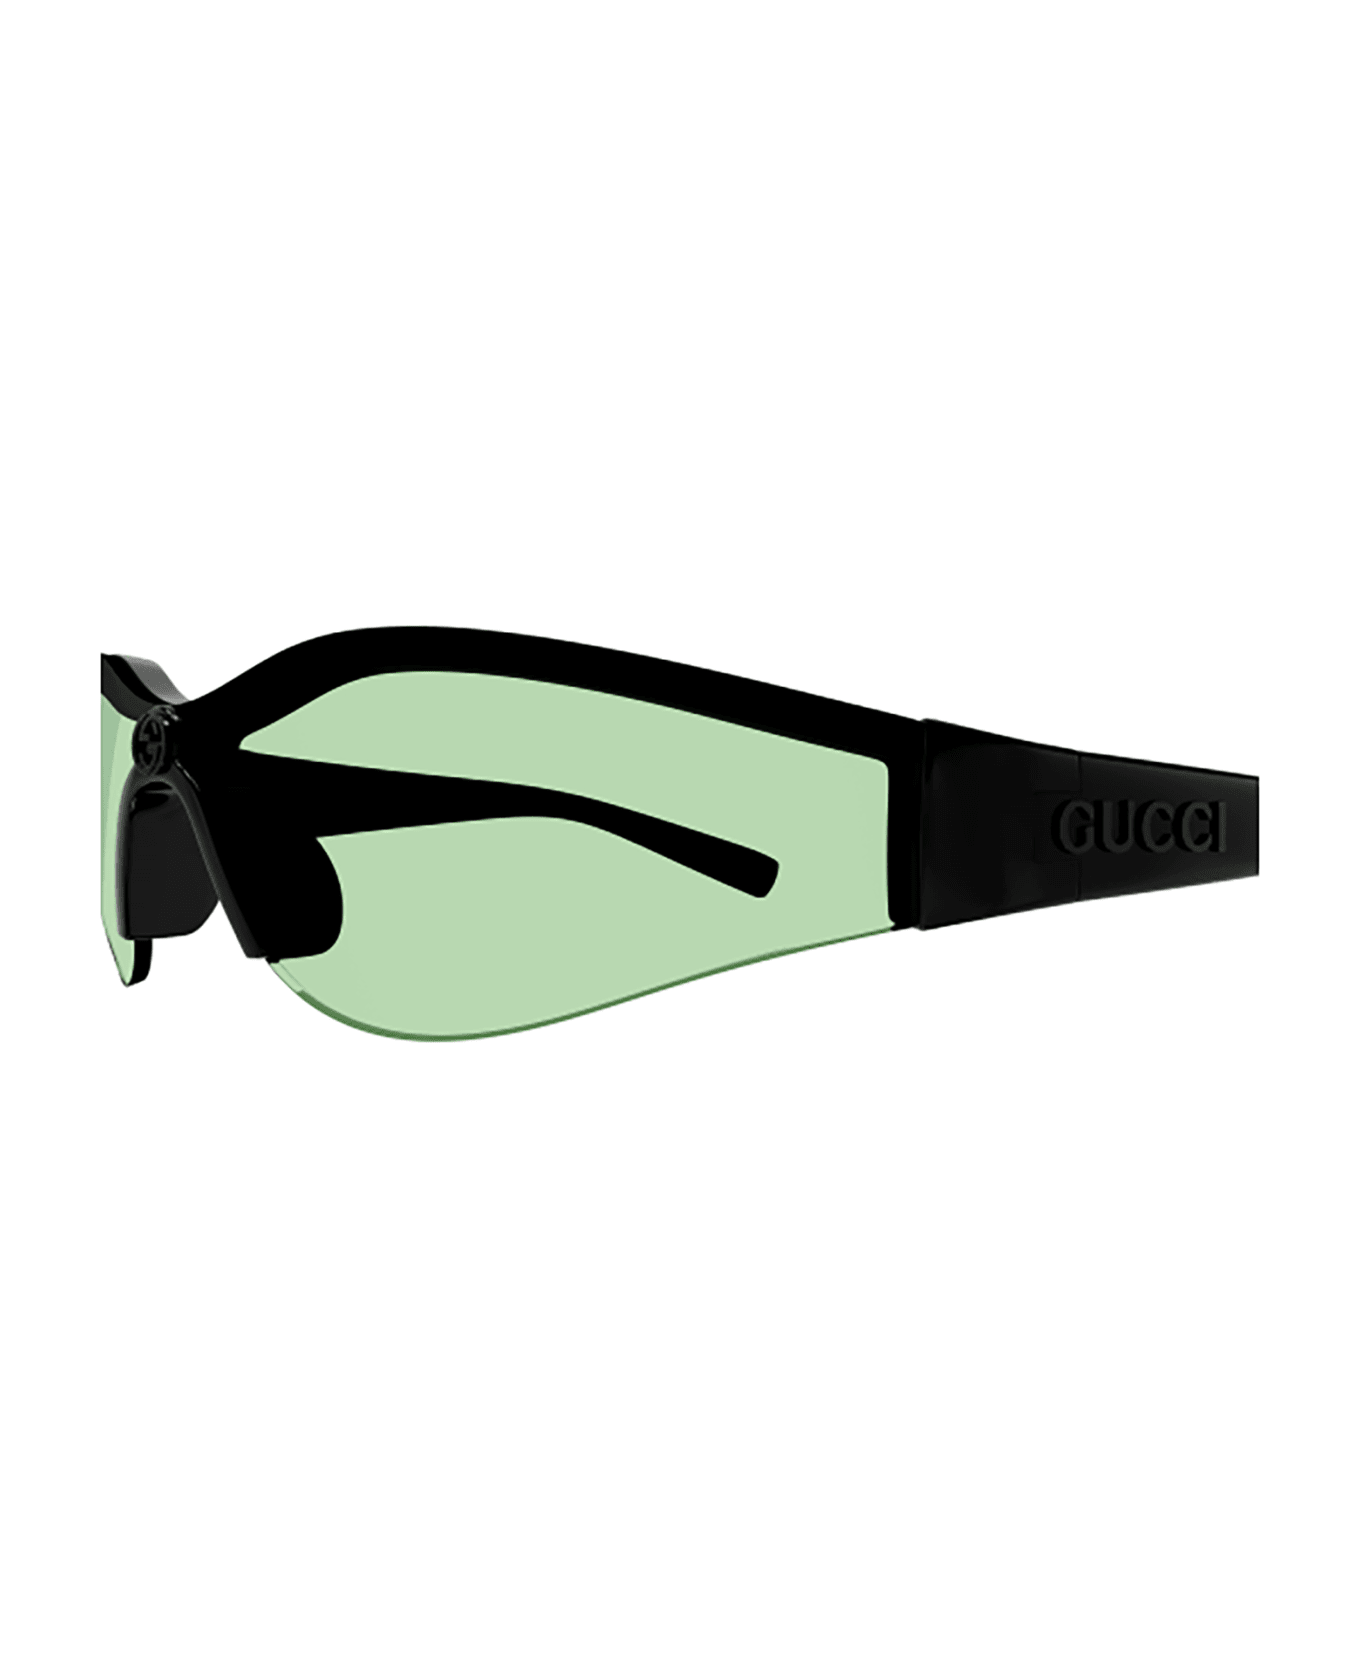 Gucci Eyewear GG1651S Sunglasses - Black Black Green サングラス